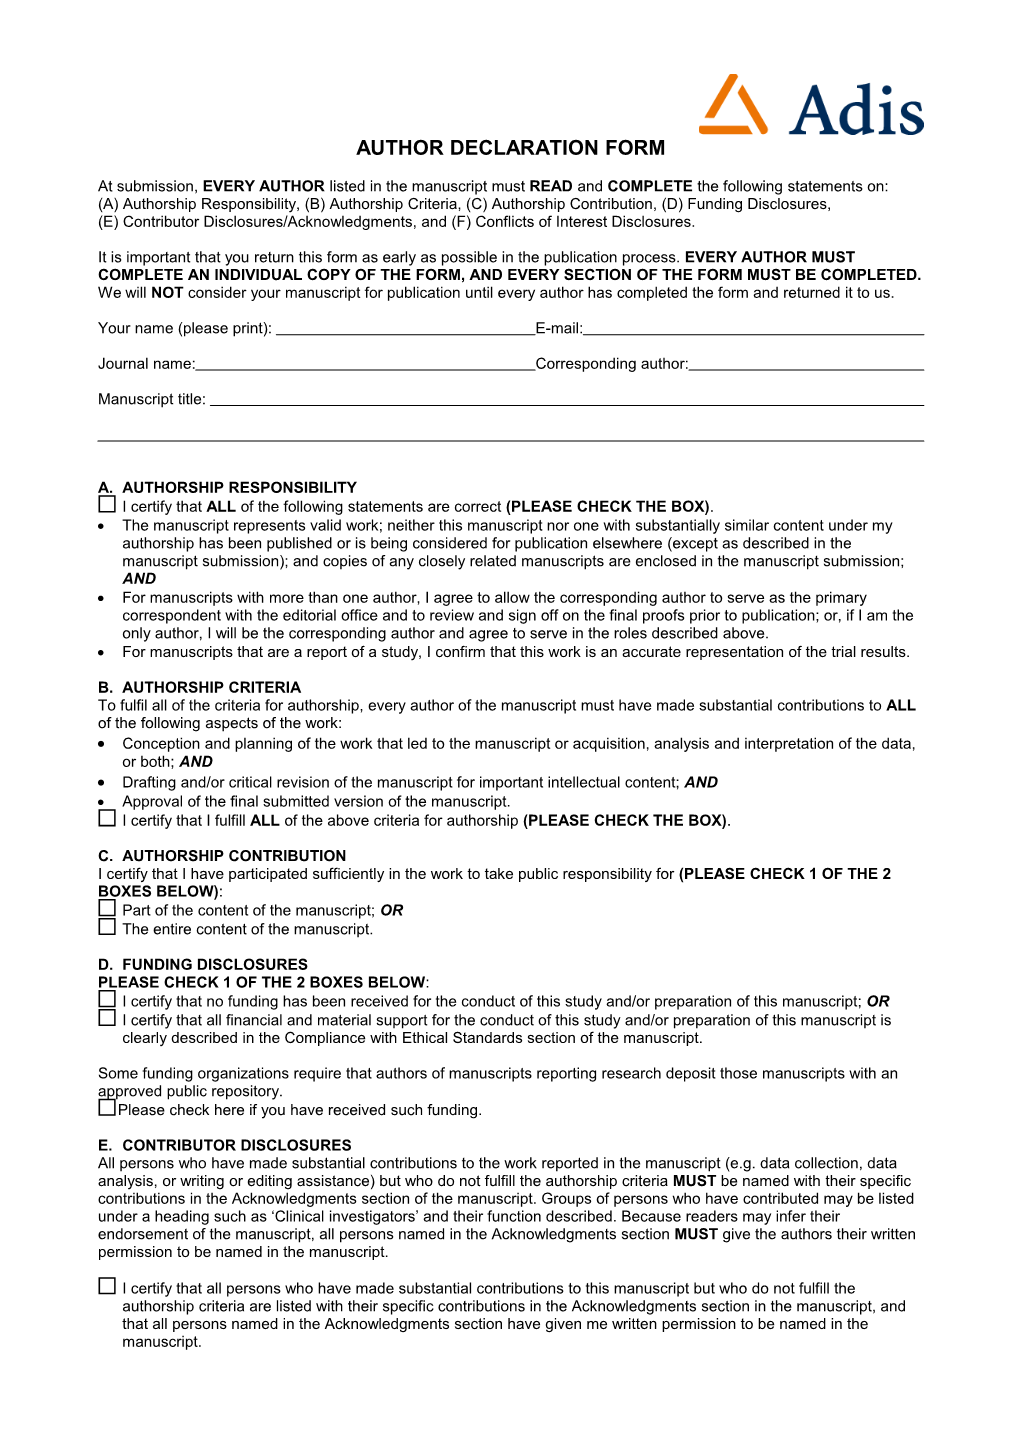 Author Declaration Form